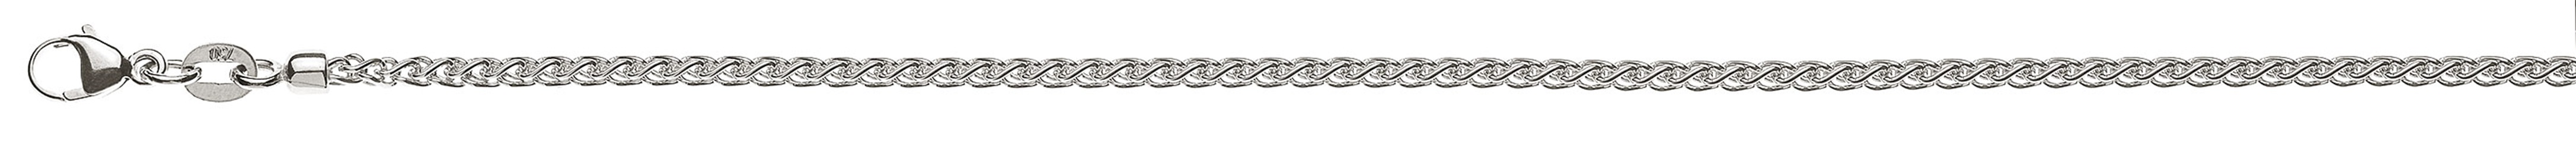 AURONOS Prestige Collier or blanc 18K chaîne câble 50cm 2.15mm